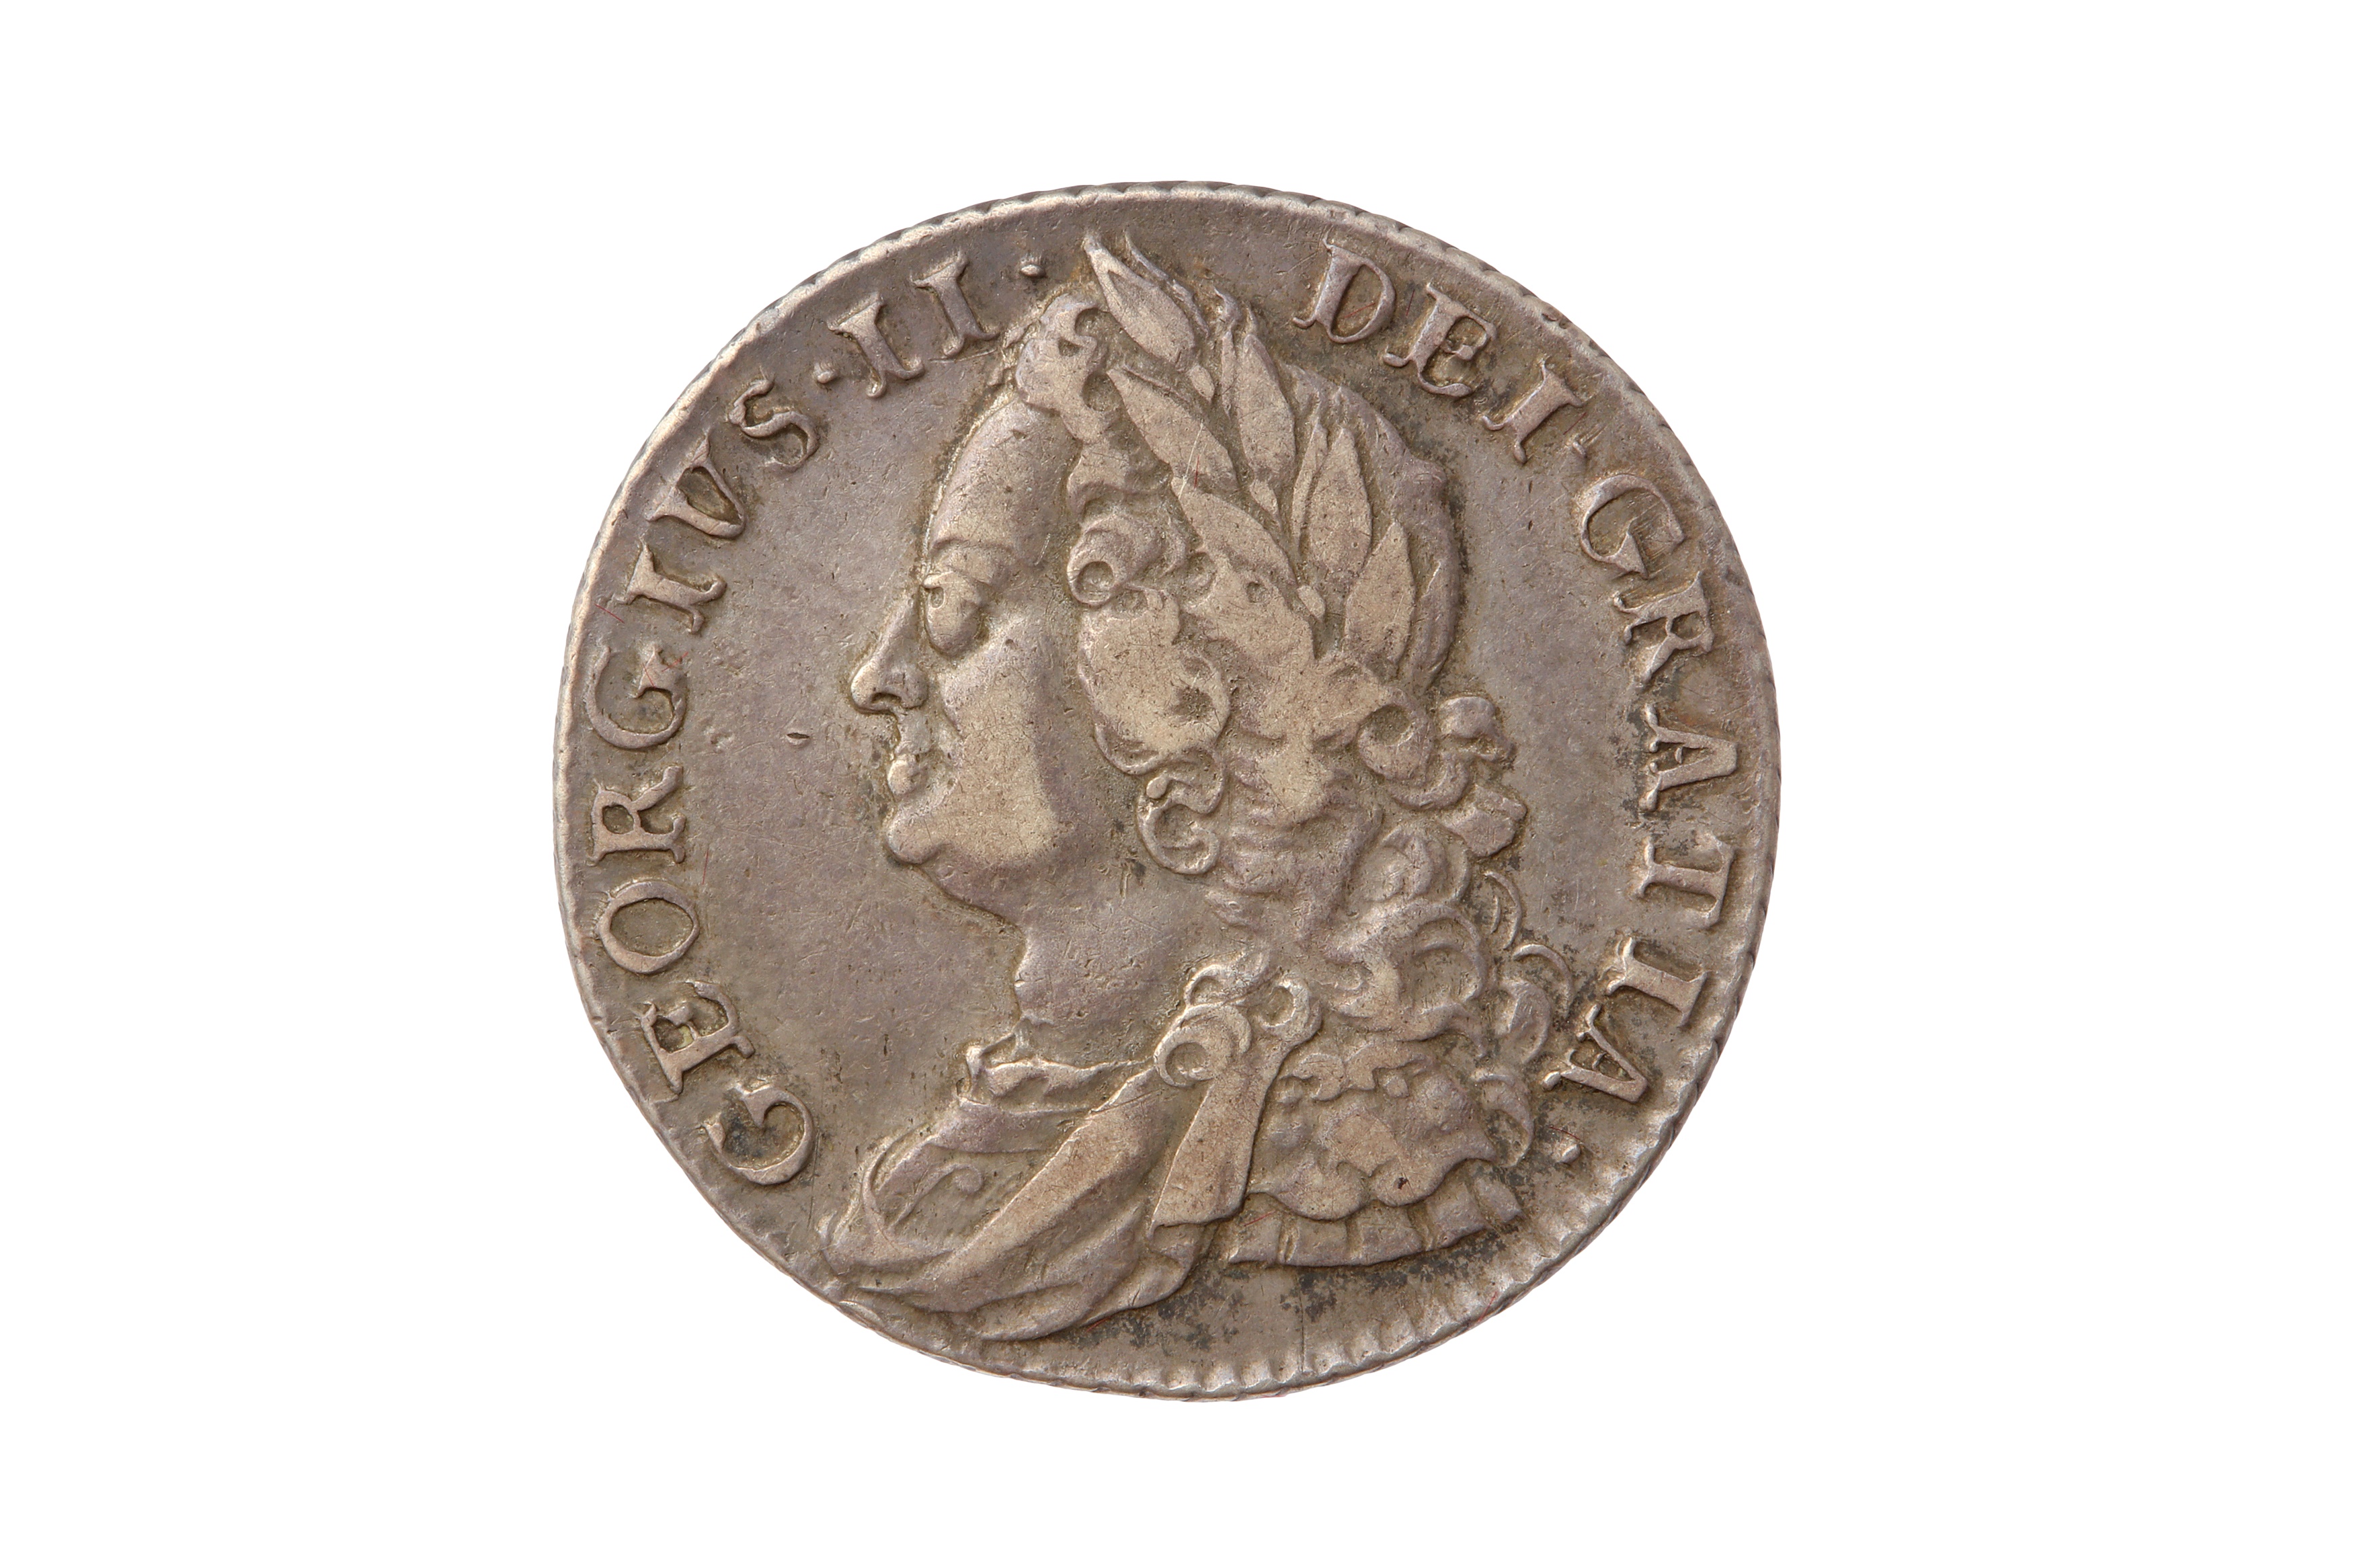 GEORGE II (1727 - 1760), 1750 (WIDE 0) SHILLING.